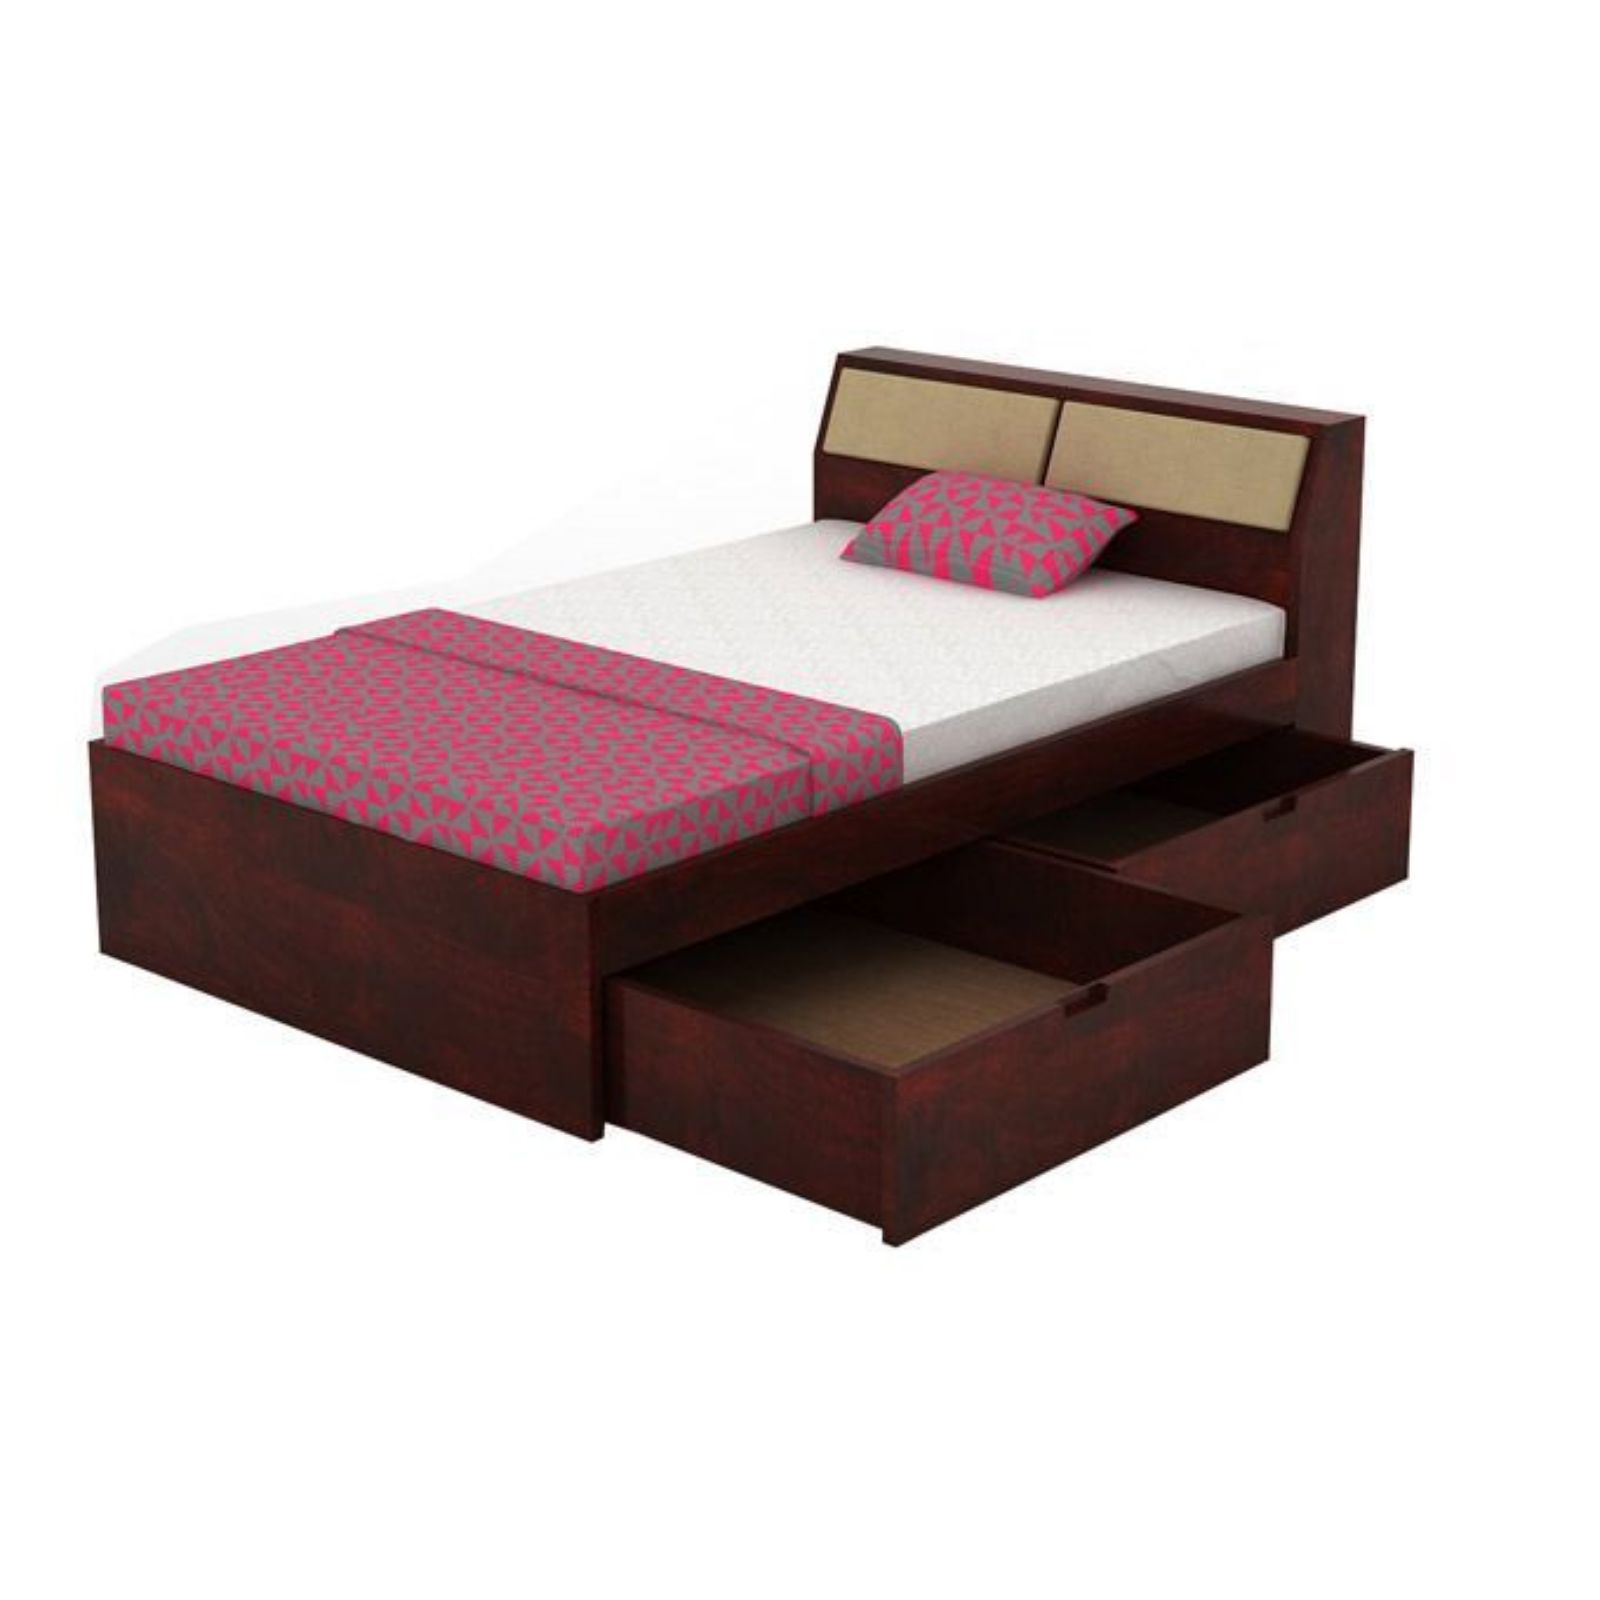 Luma Single Bed With Storage box headboard